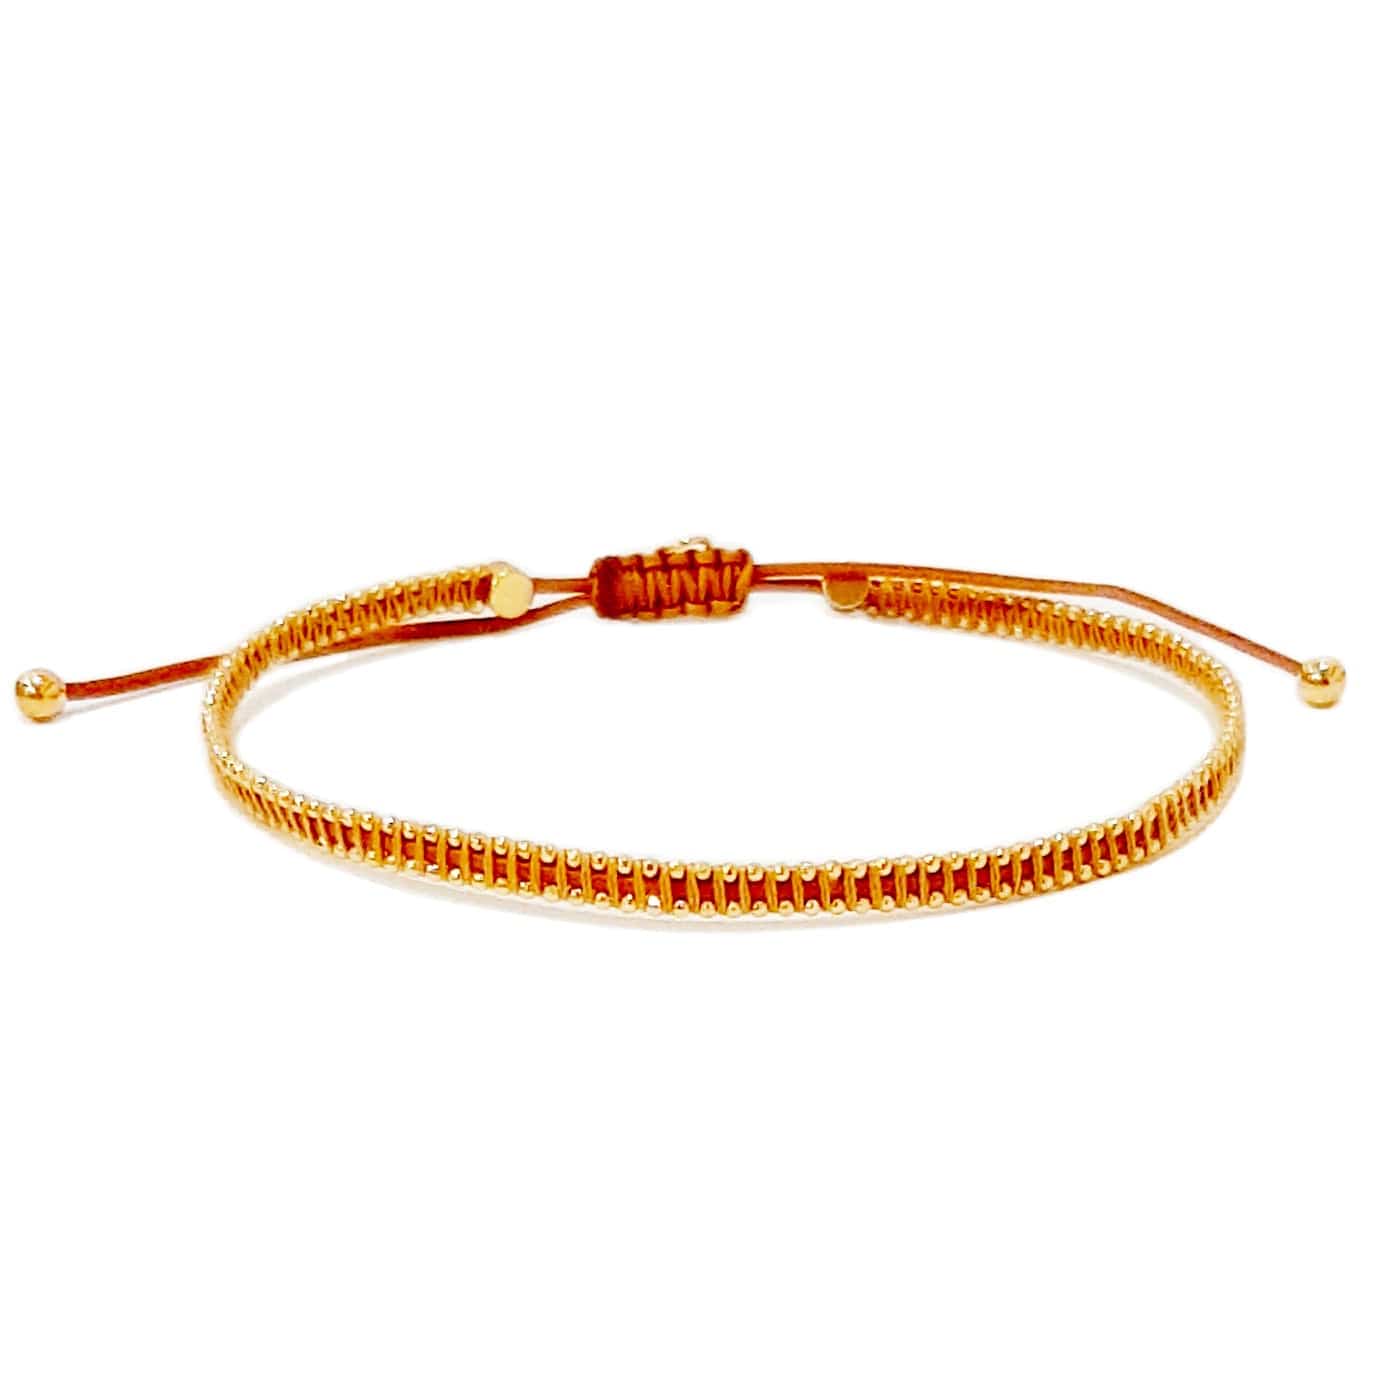 TAI JEWELRY Bracelet Orange Handmade Silk Bracelet With Gold Beaded Accents